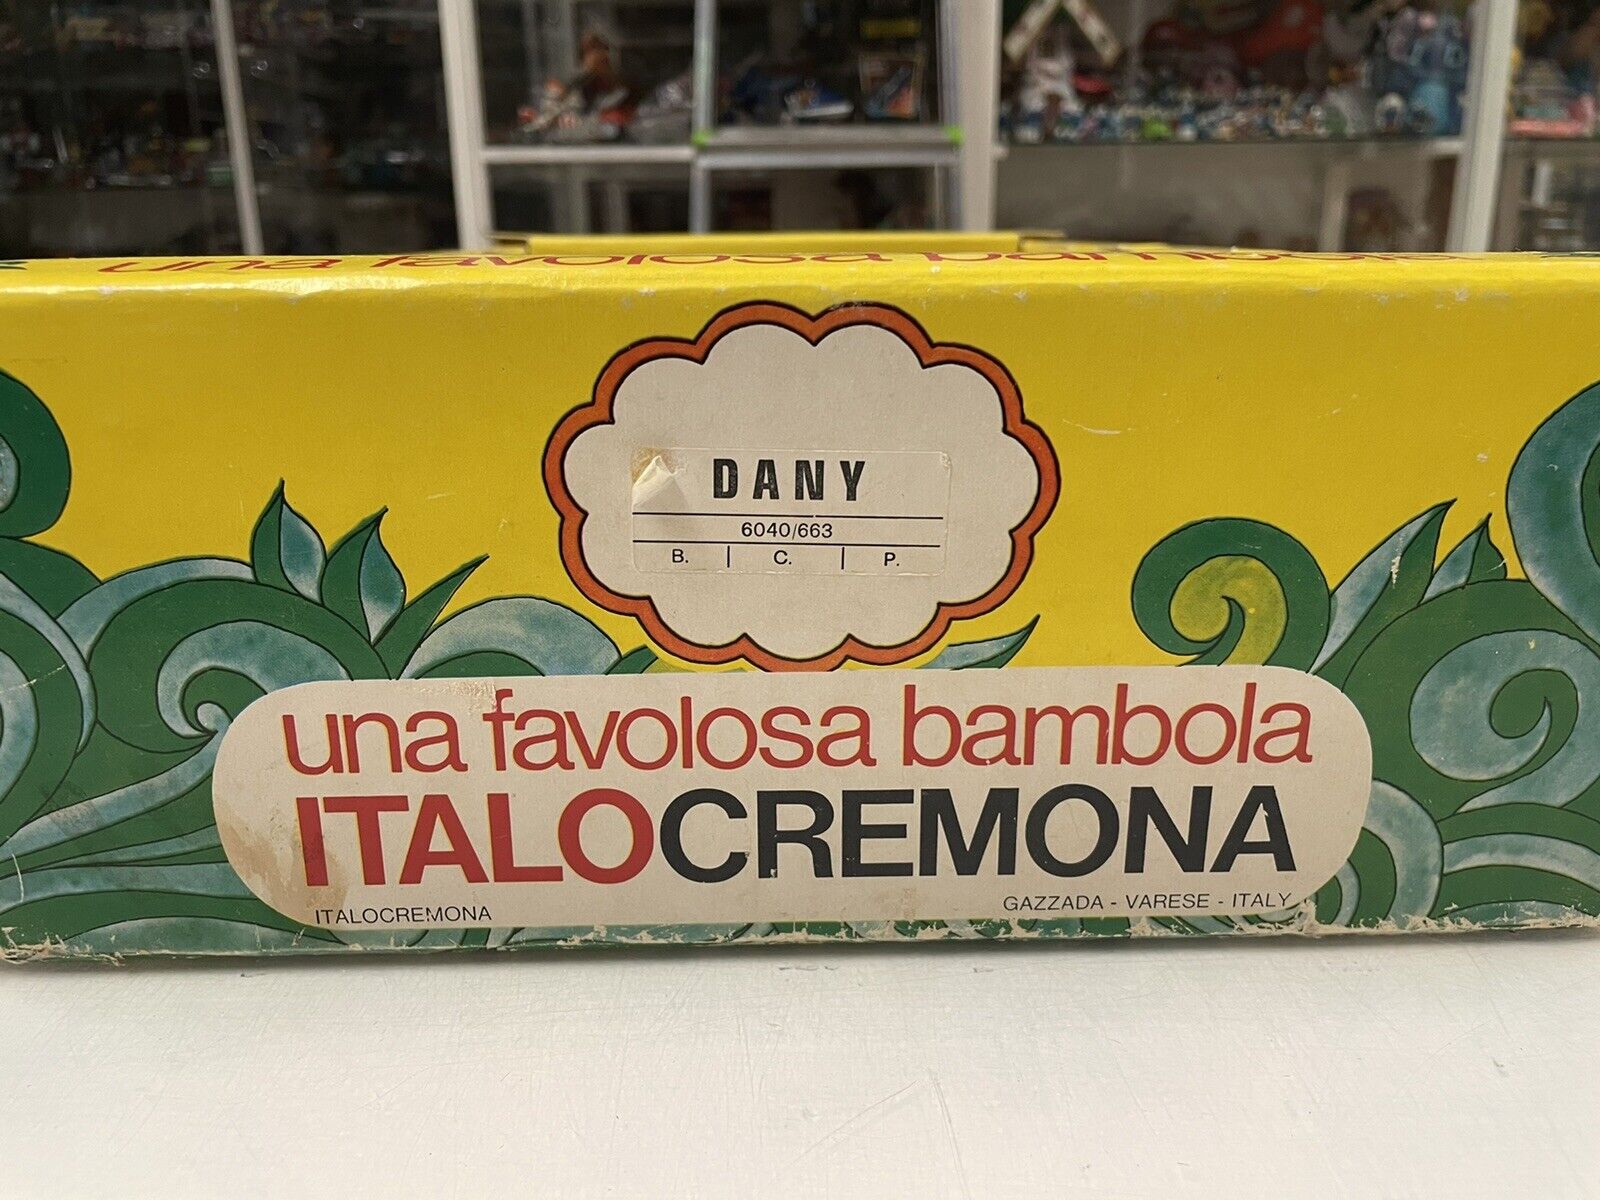 Le-Favolose-Bambole-ITALOCREMONA-Italo-Cremona-DANY-Box-Scatola-144779087778